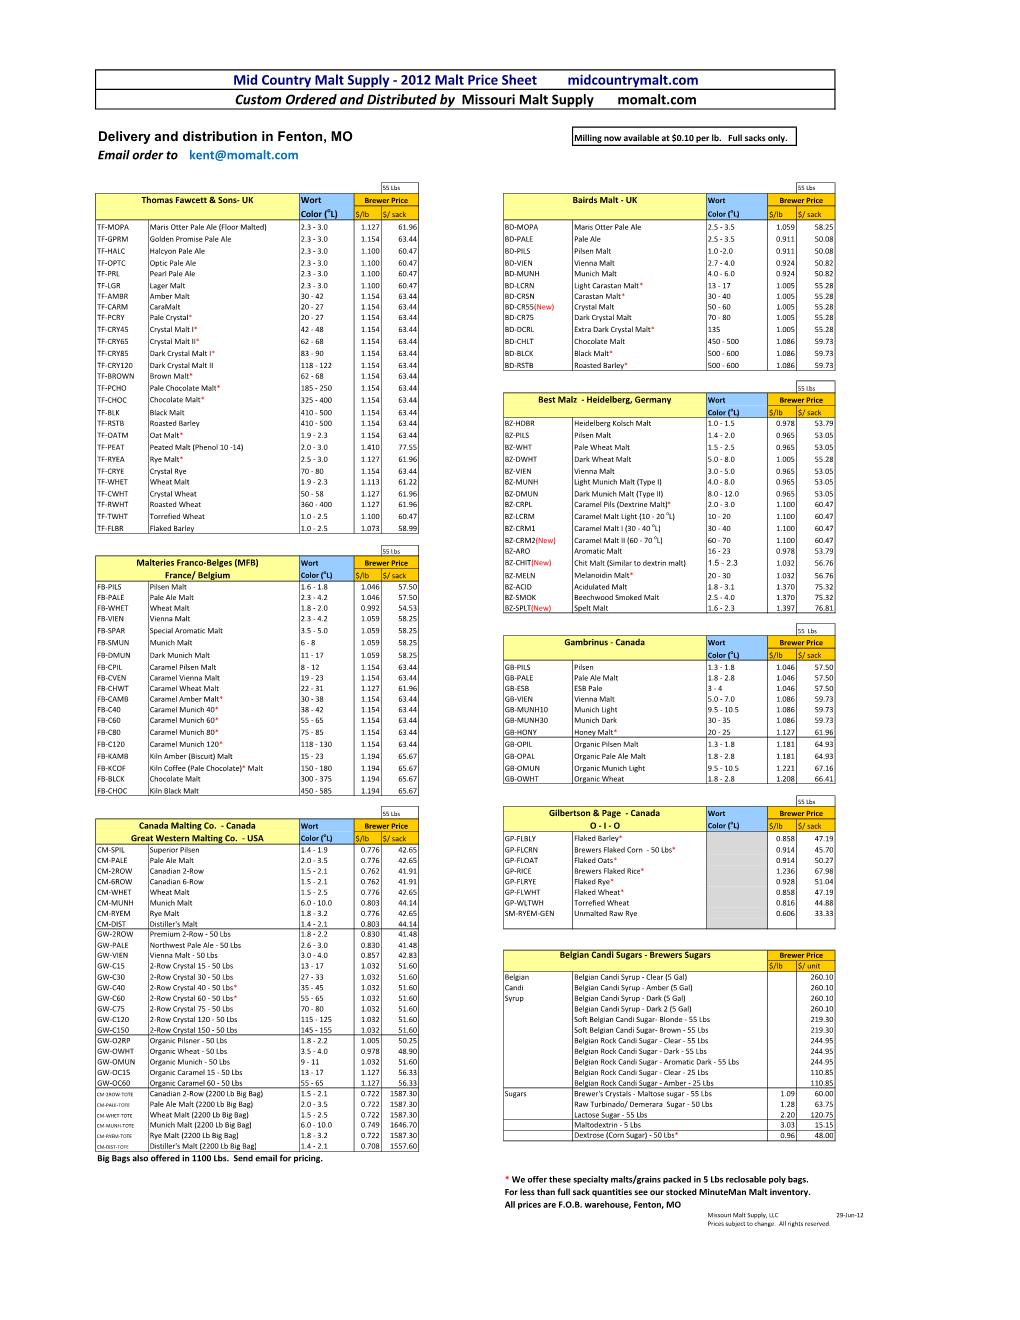 Mid Country 2012 Malt Price Sheet